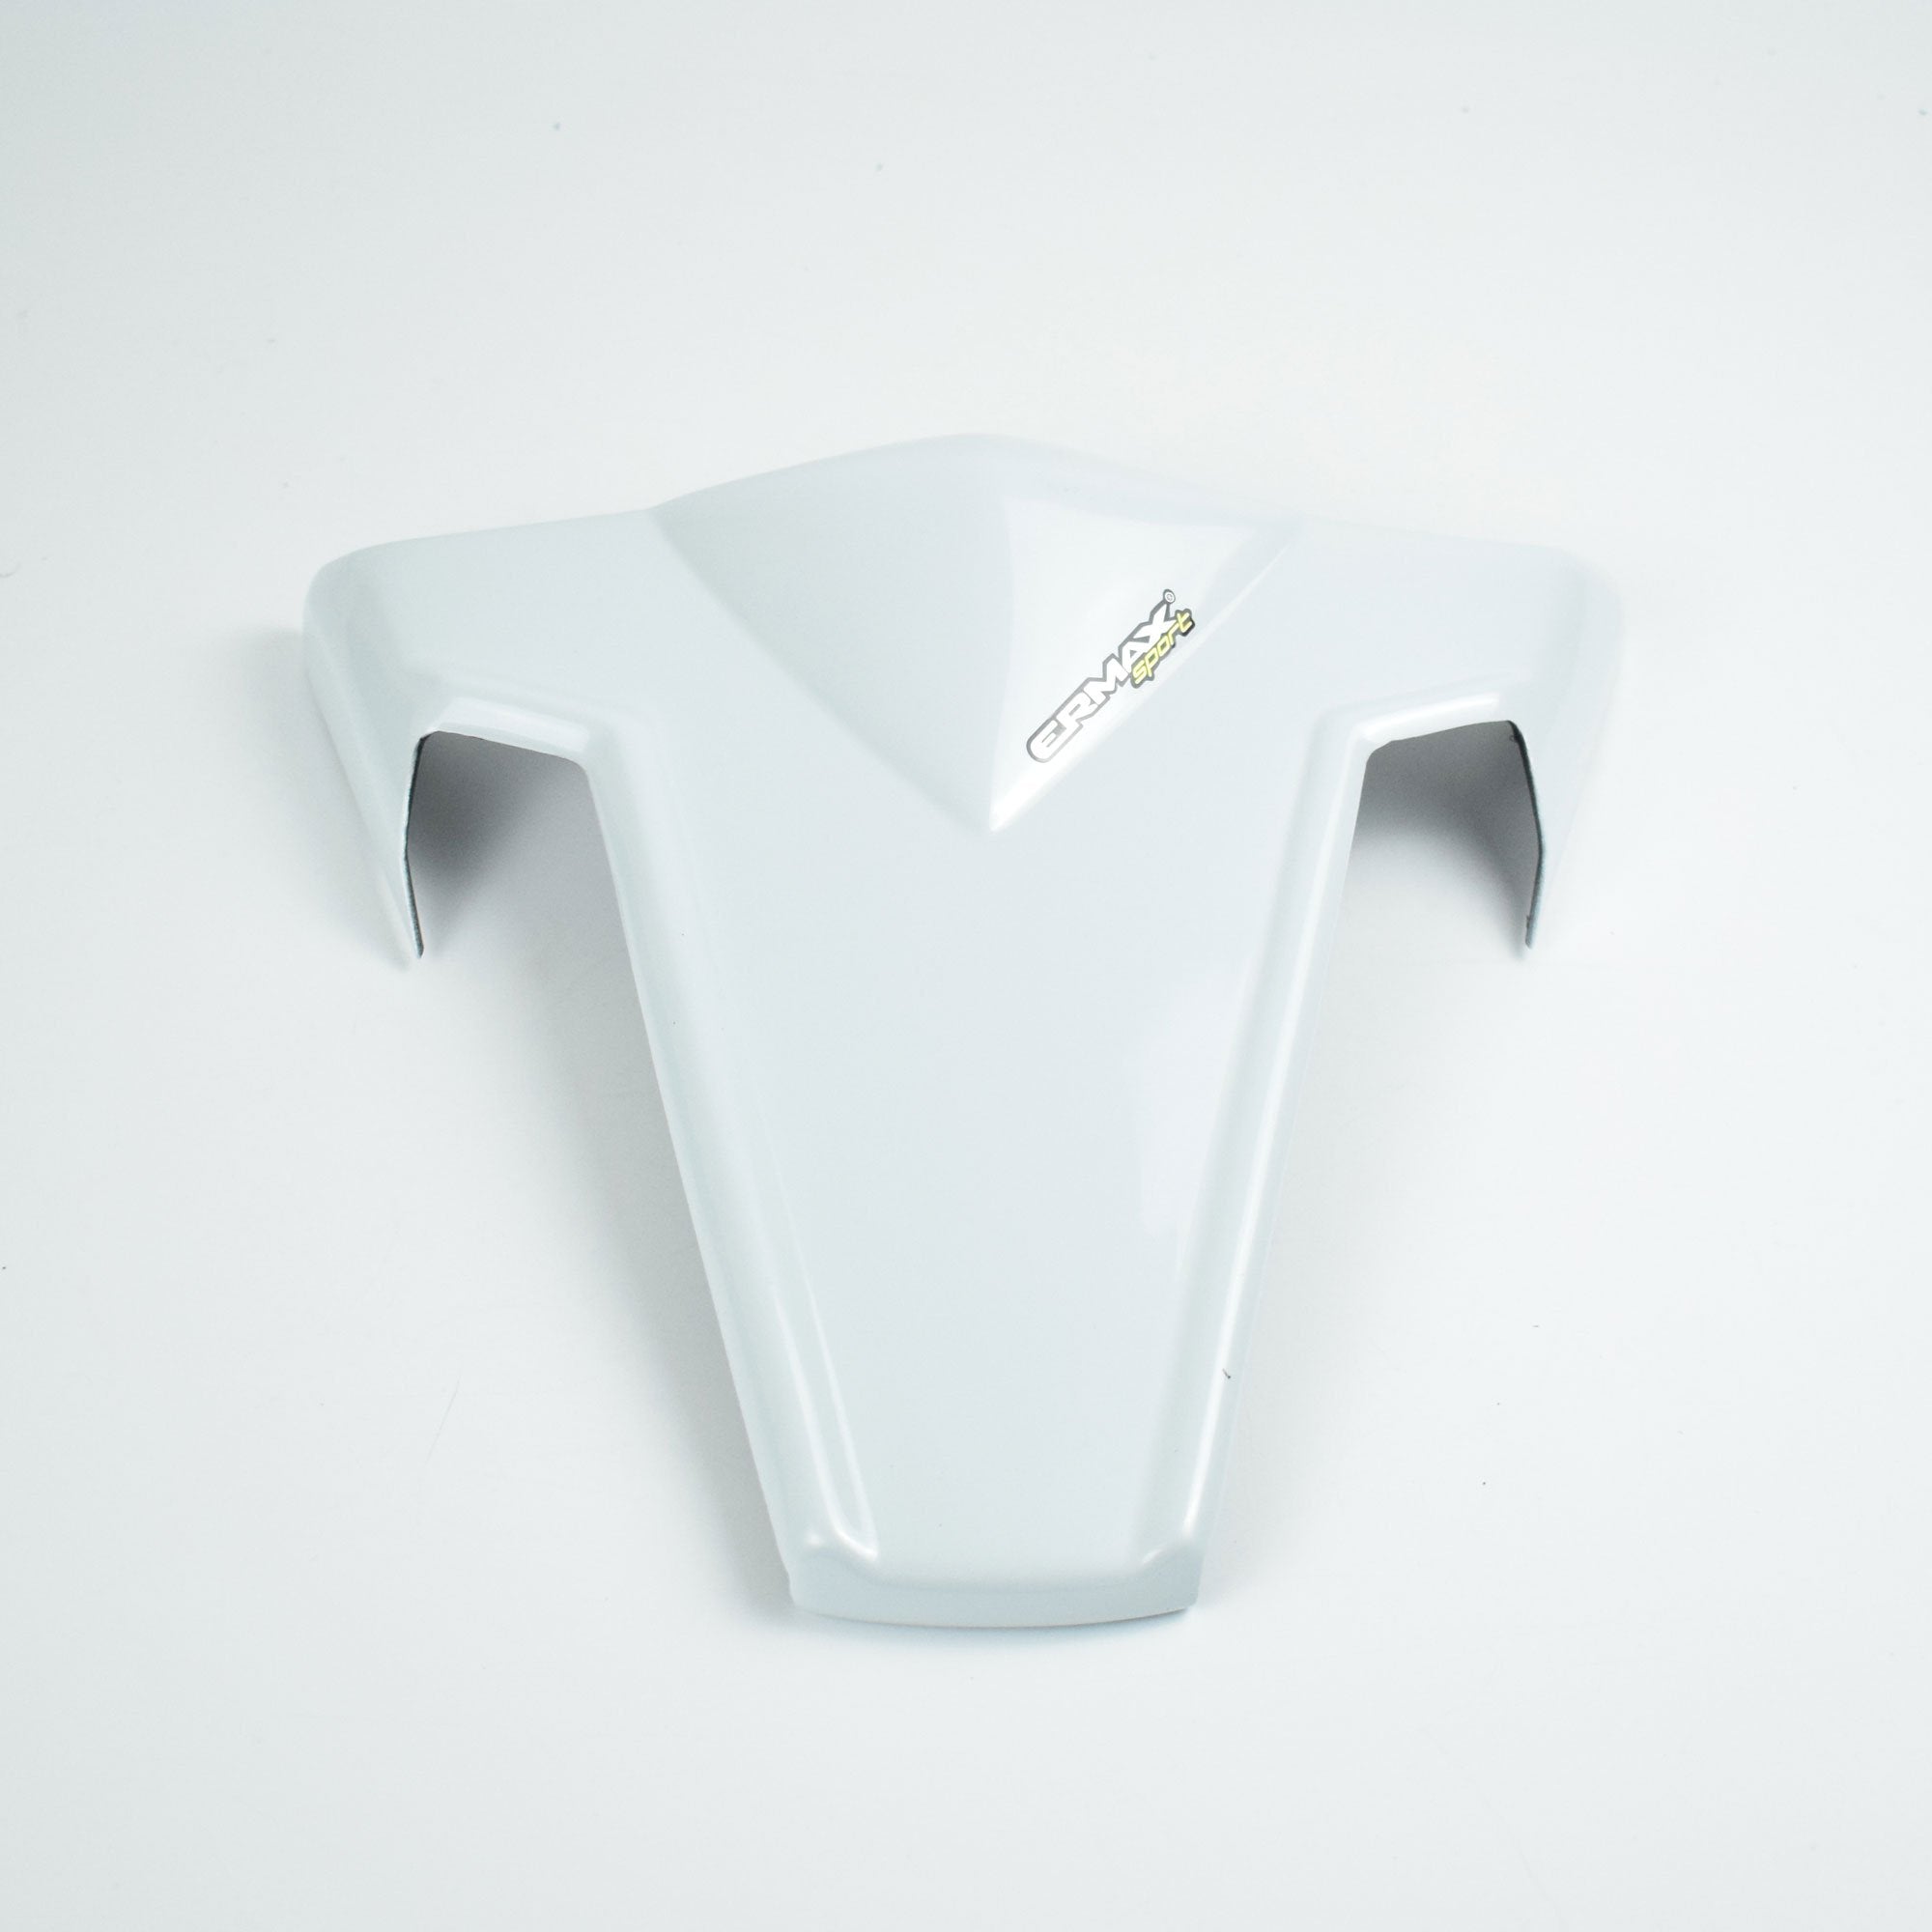 Ermax Seat Cowl | Metallic White (Pearl Cool White) | Honda CB 1000 R 2008>2017-E850112103-Seat Cowls-Pyramid Motorcycle Accessories